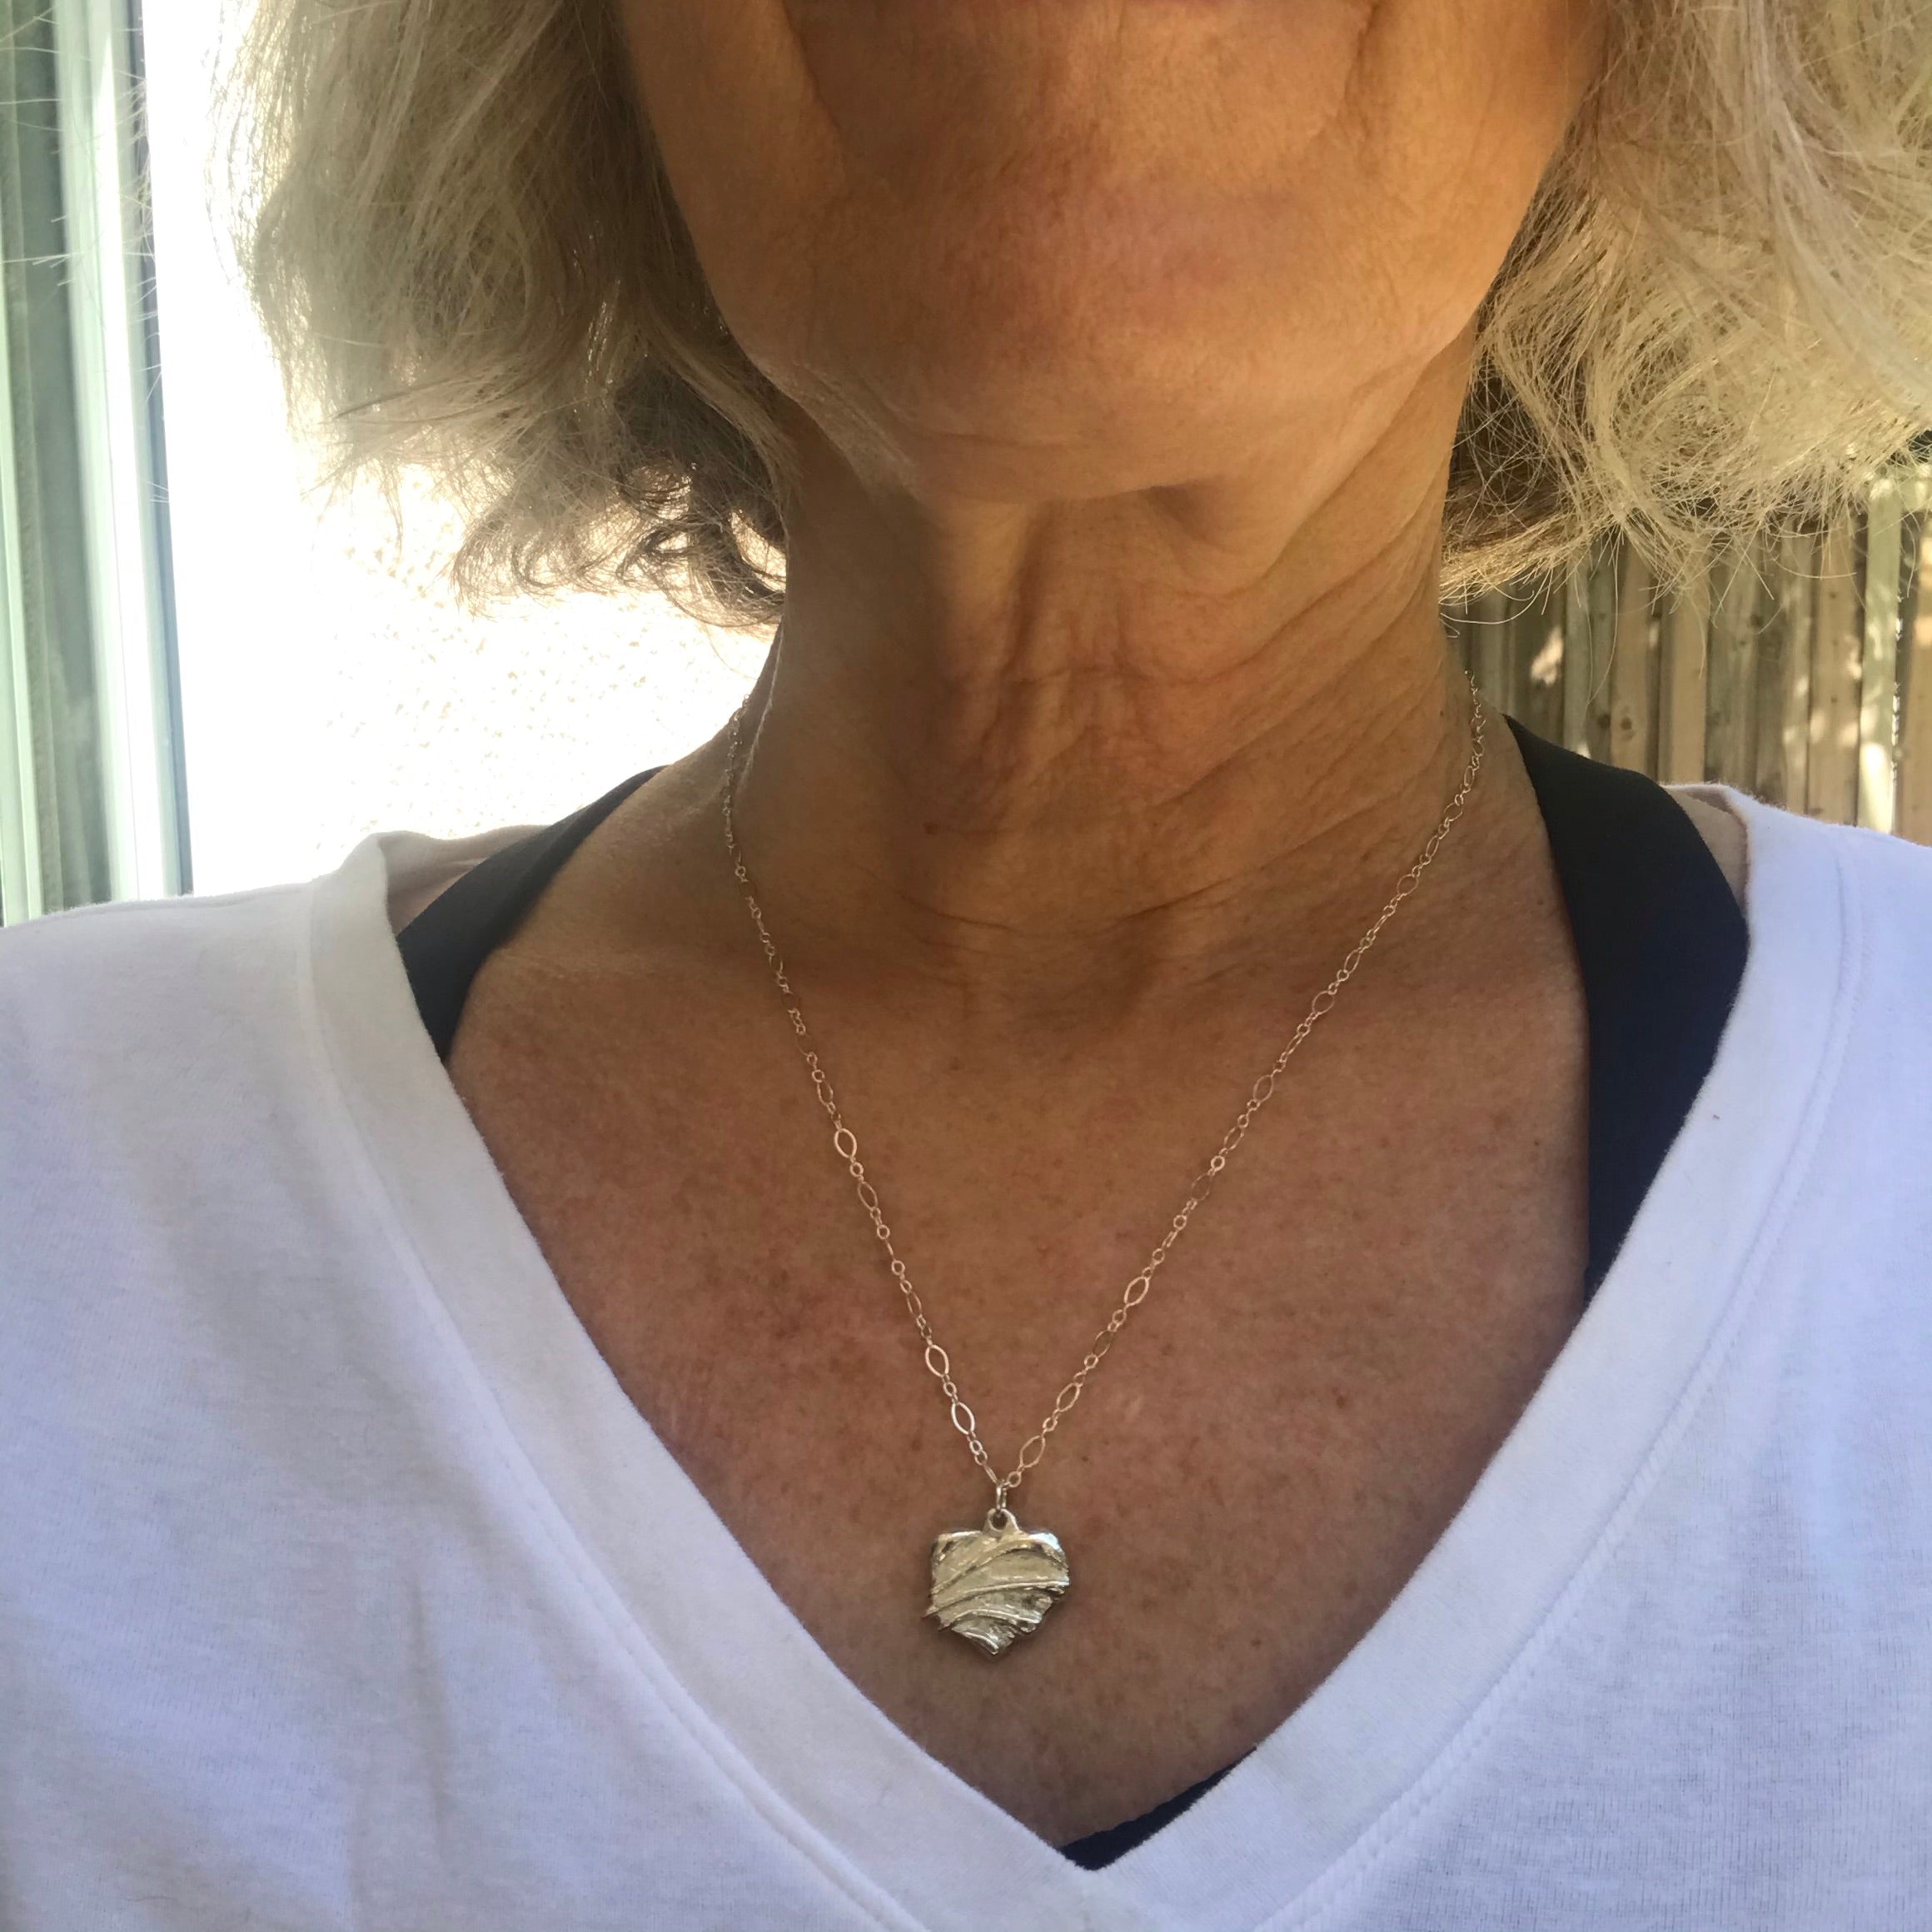 Celebrate Hope Heart Pendant Necklace